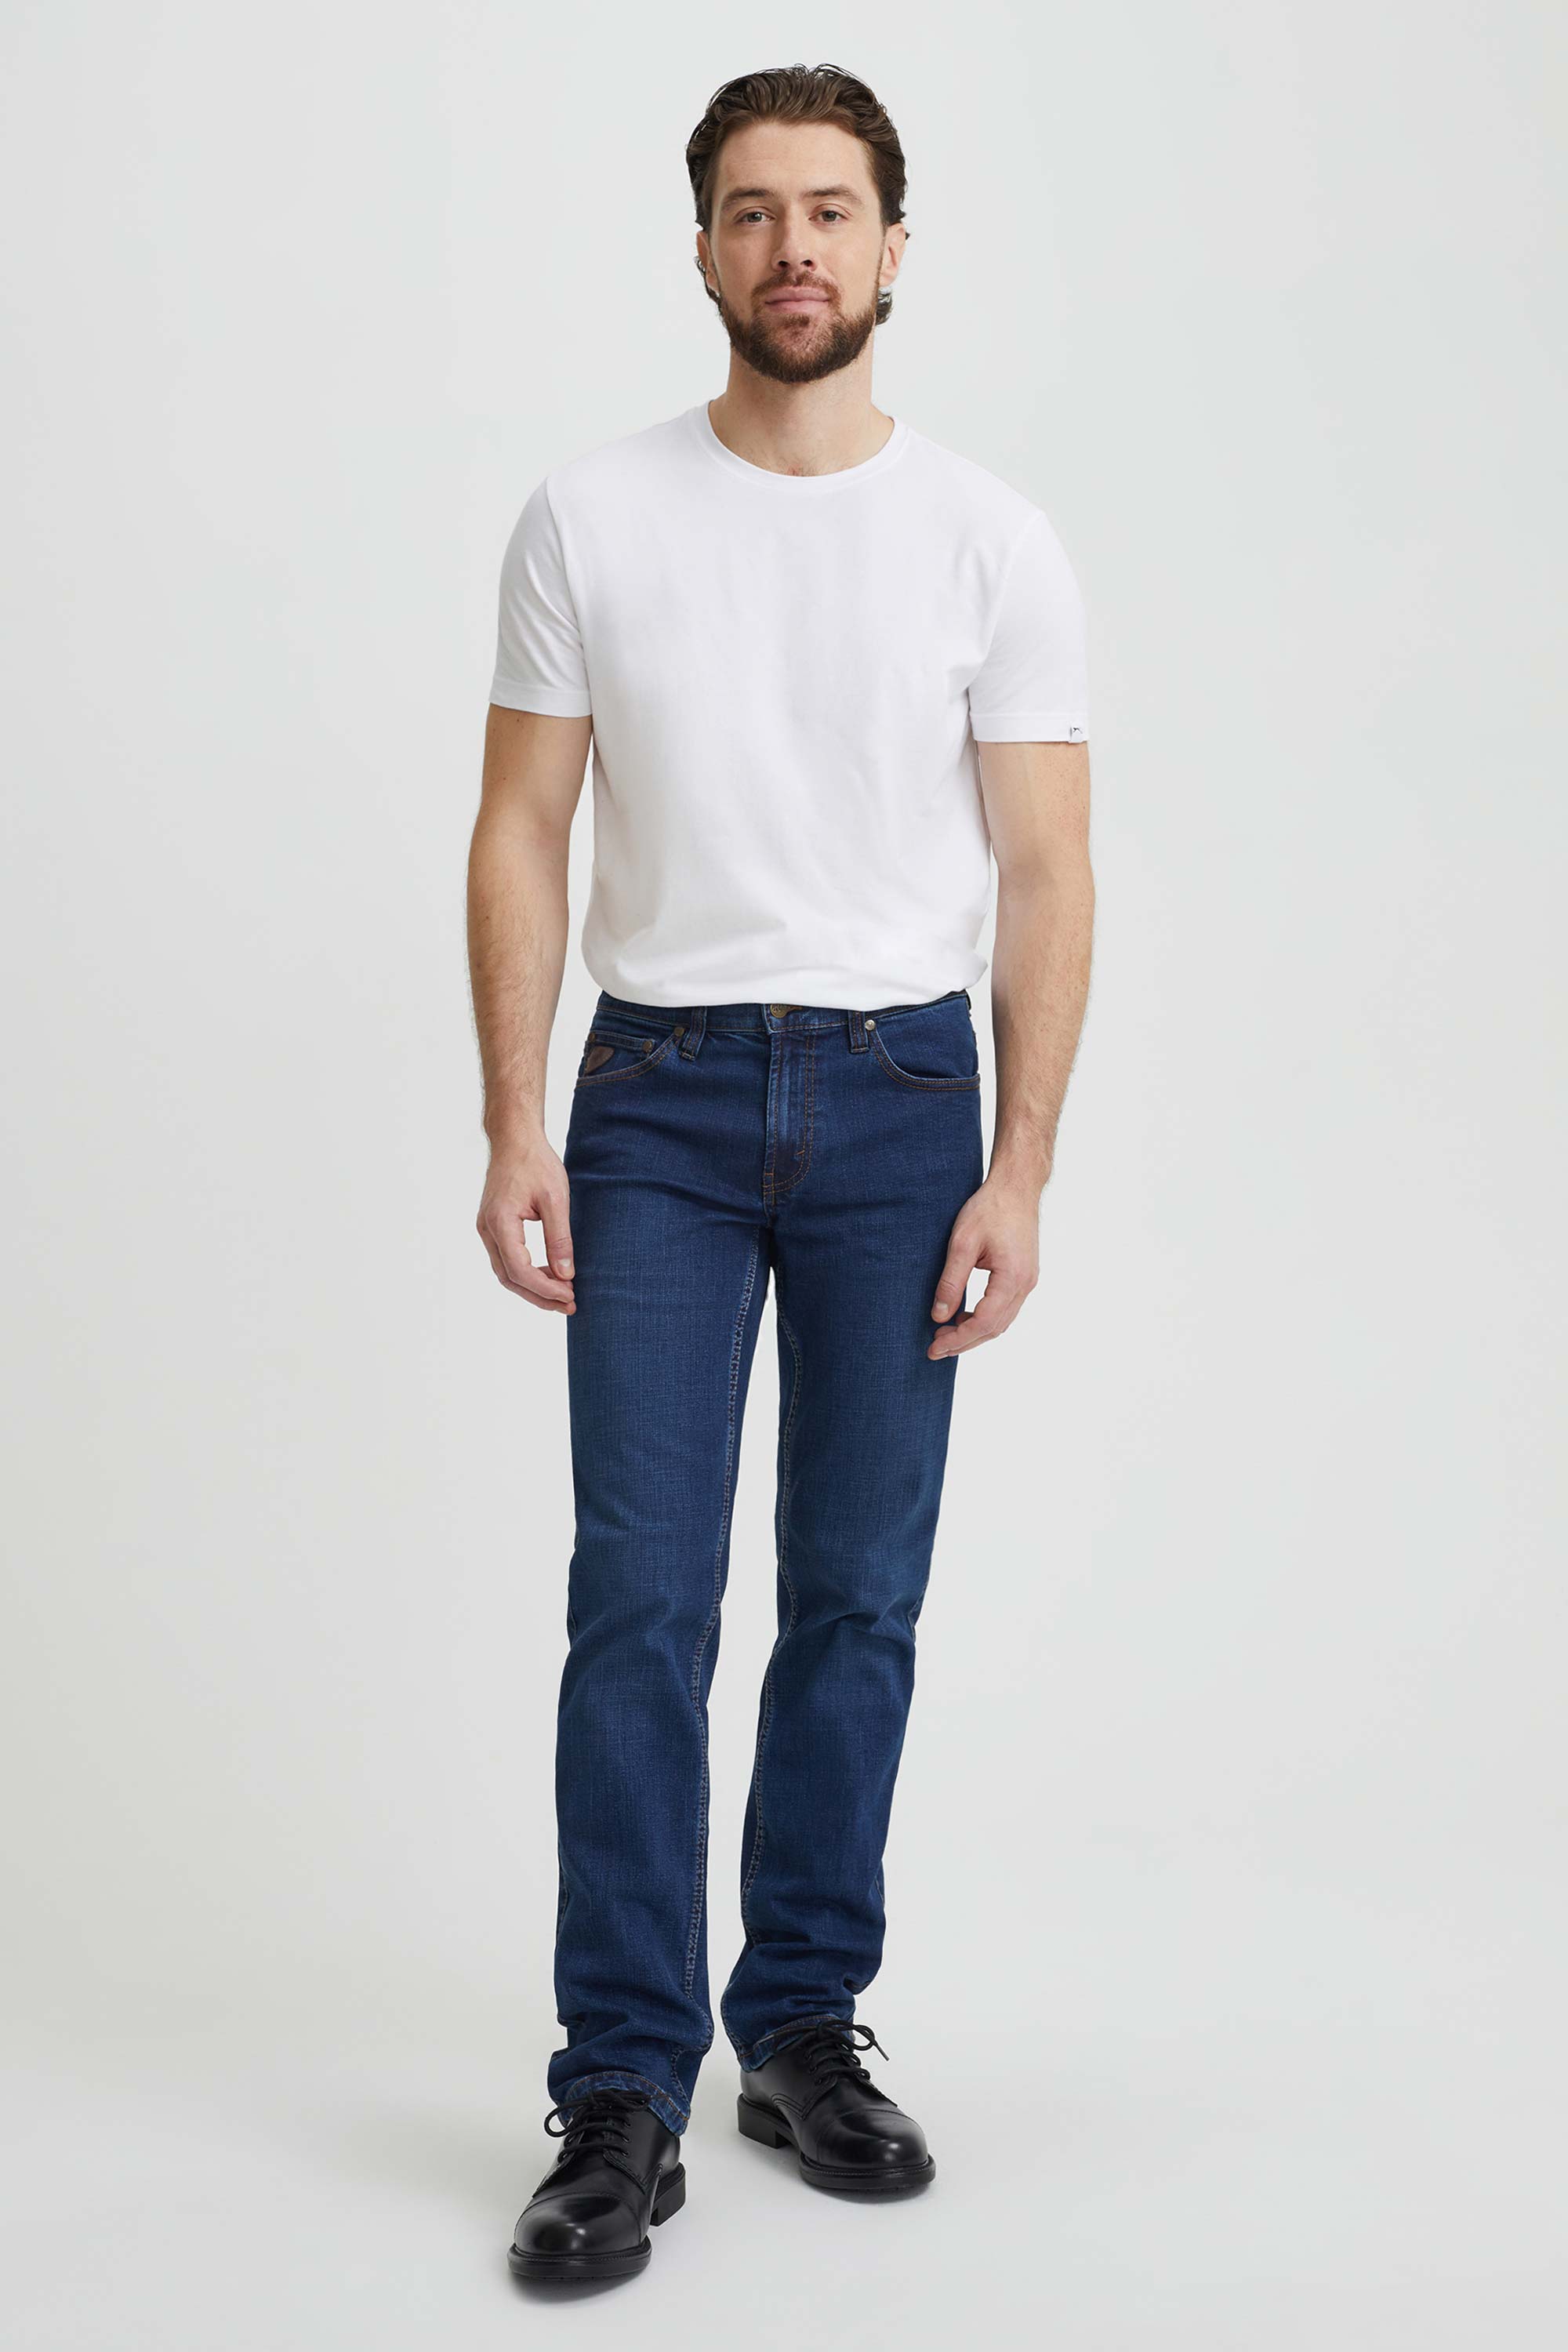 Peter jeans with semi-low waist – Le Jean Bleu